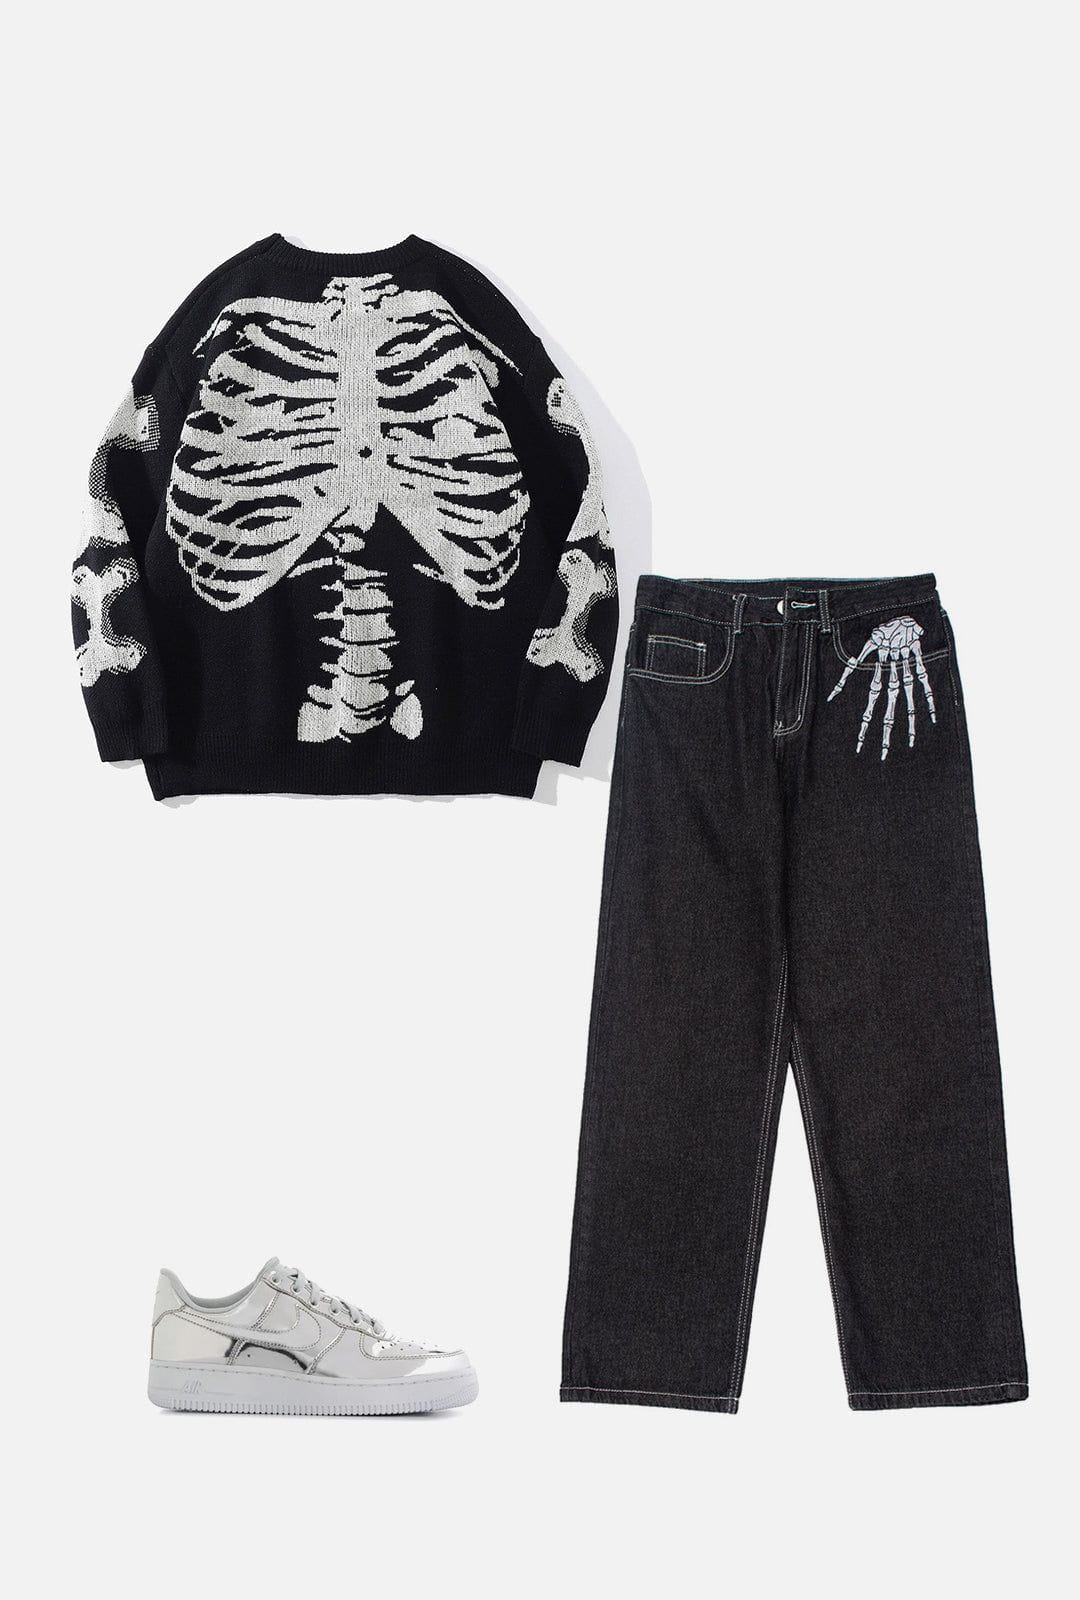 Majesda® - Vintage Skull Bone Embroidery Jeans outfit ideas streetwear fashion